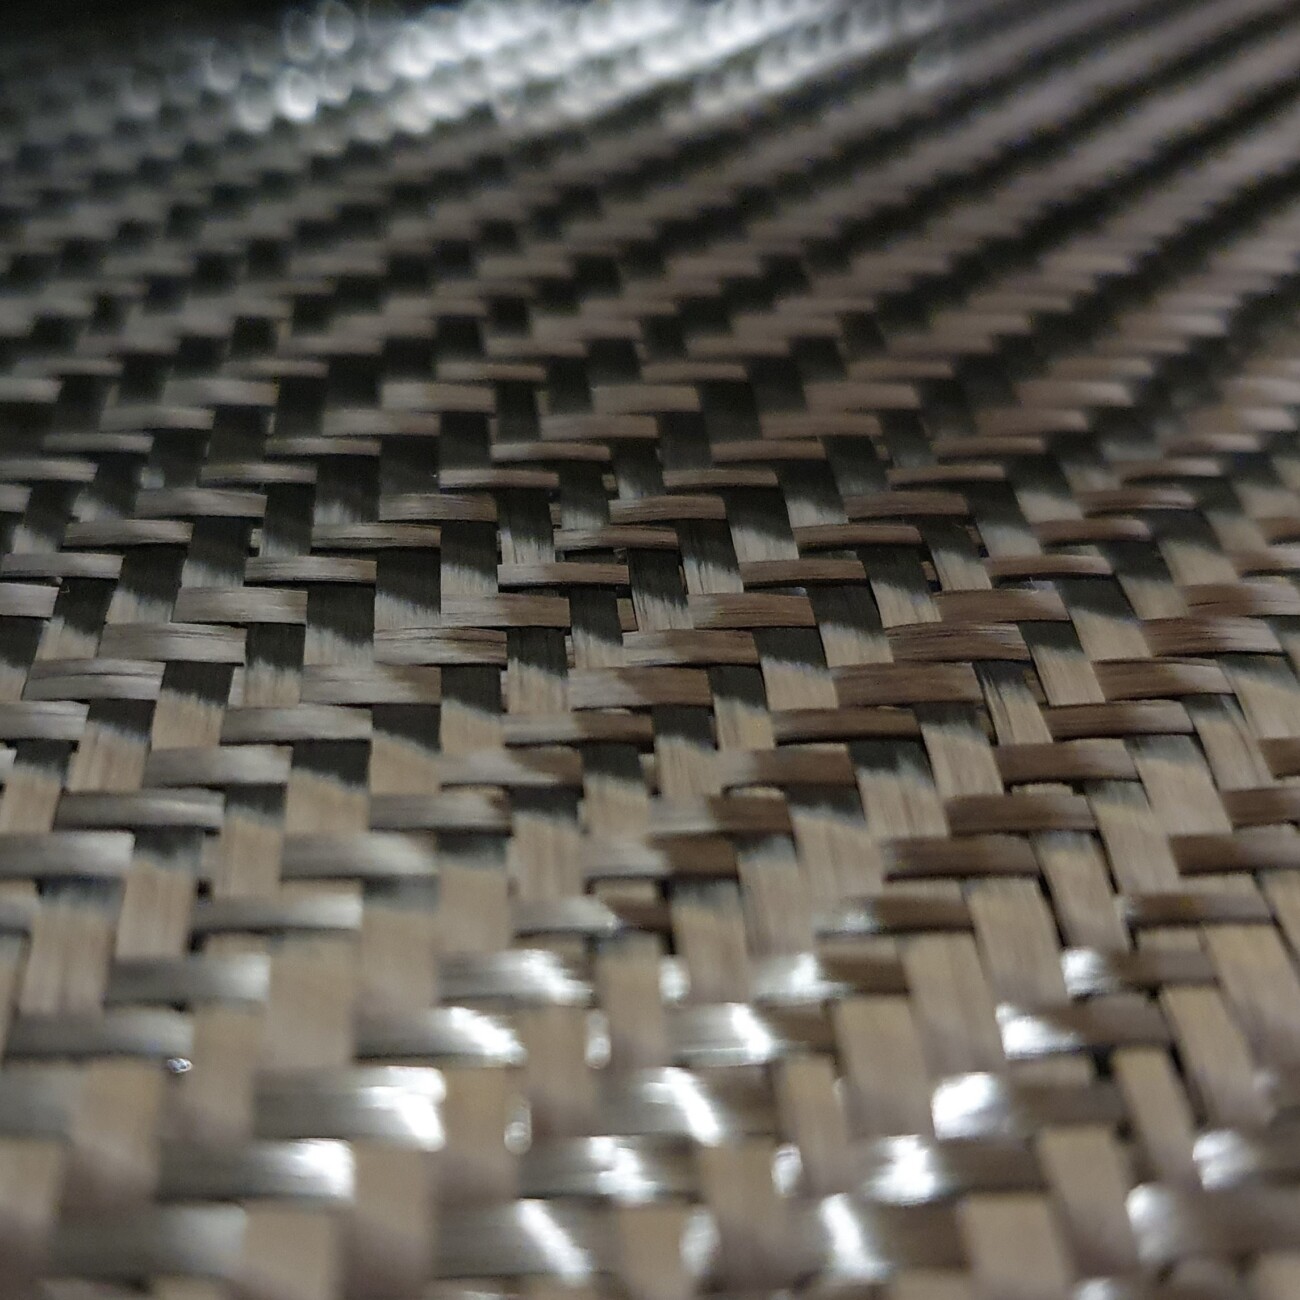 Commercial Grade Carbon Fiber Fabric 2×2 Twill 3k 6oz/203gsm - Composite  Envisions